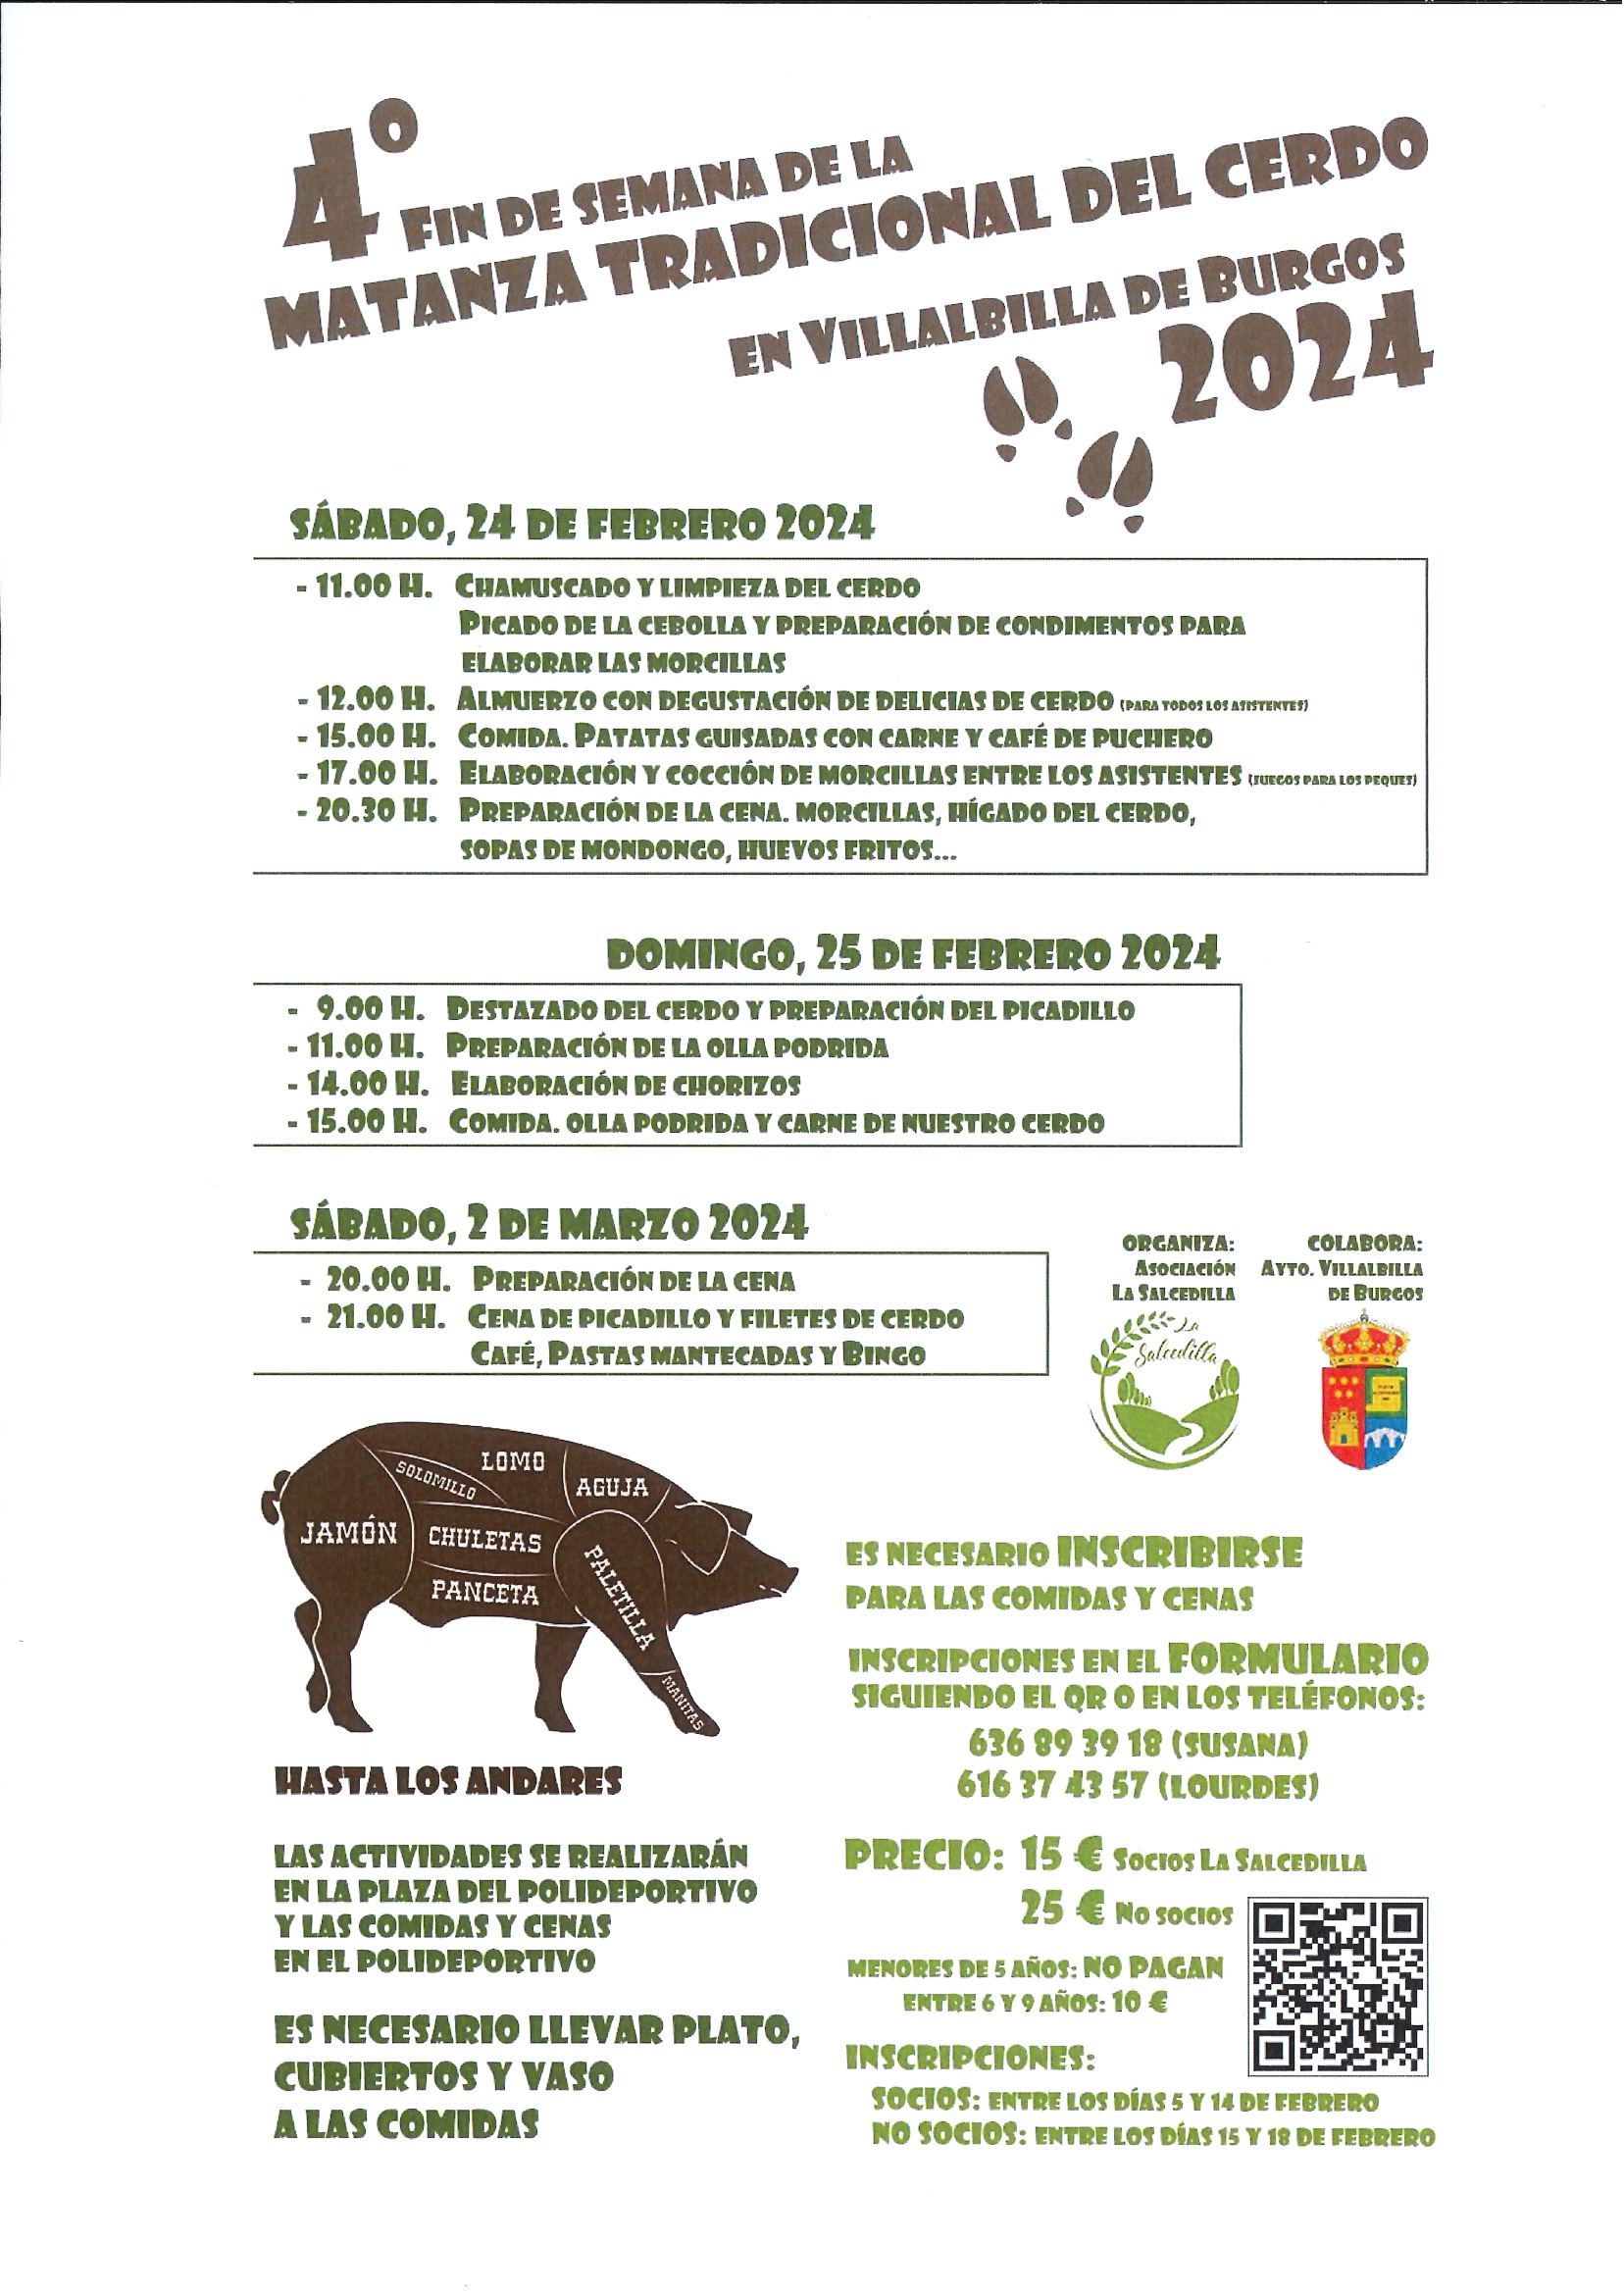 4º Fin de semana de la matanza tradicional del cerdo en Villalbilla de Burgos 2024